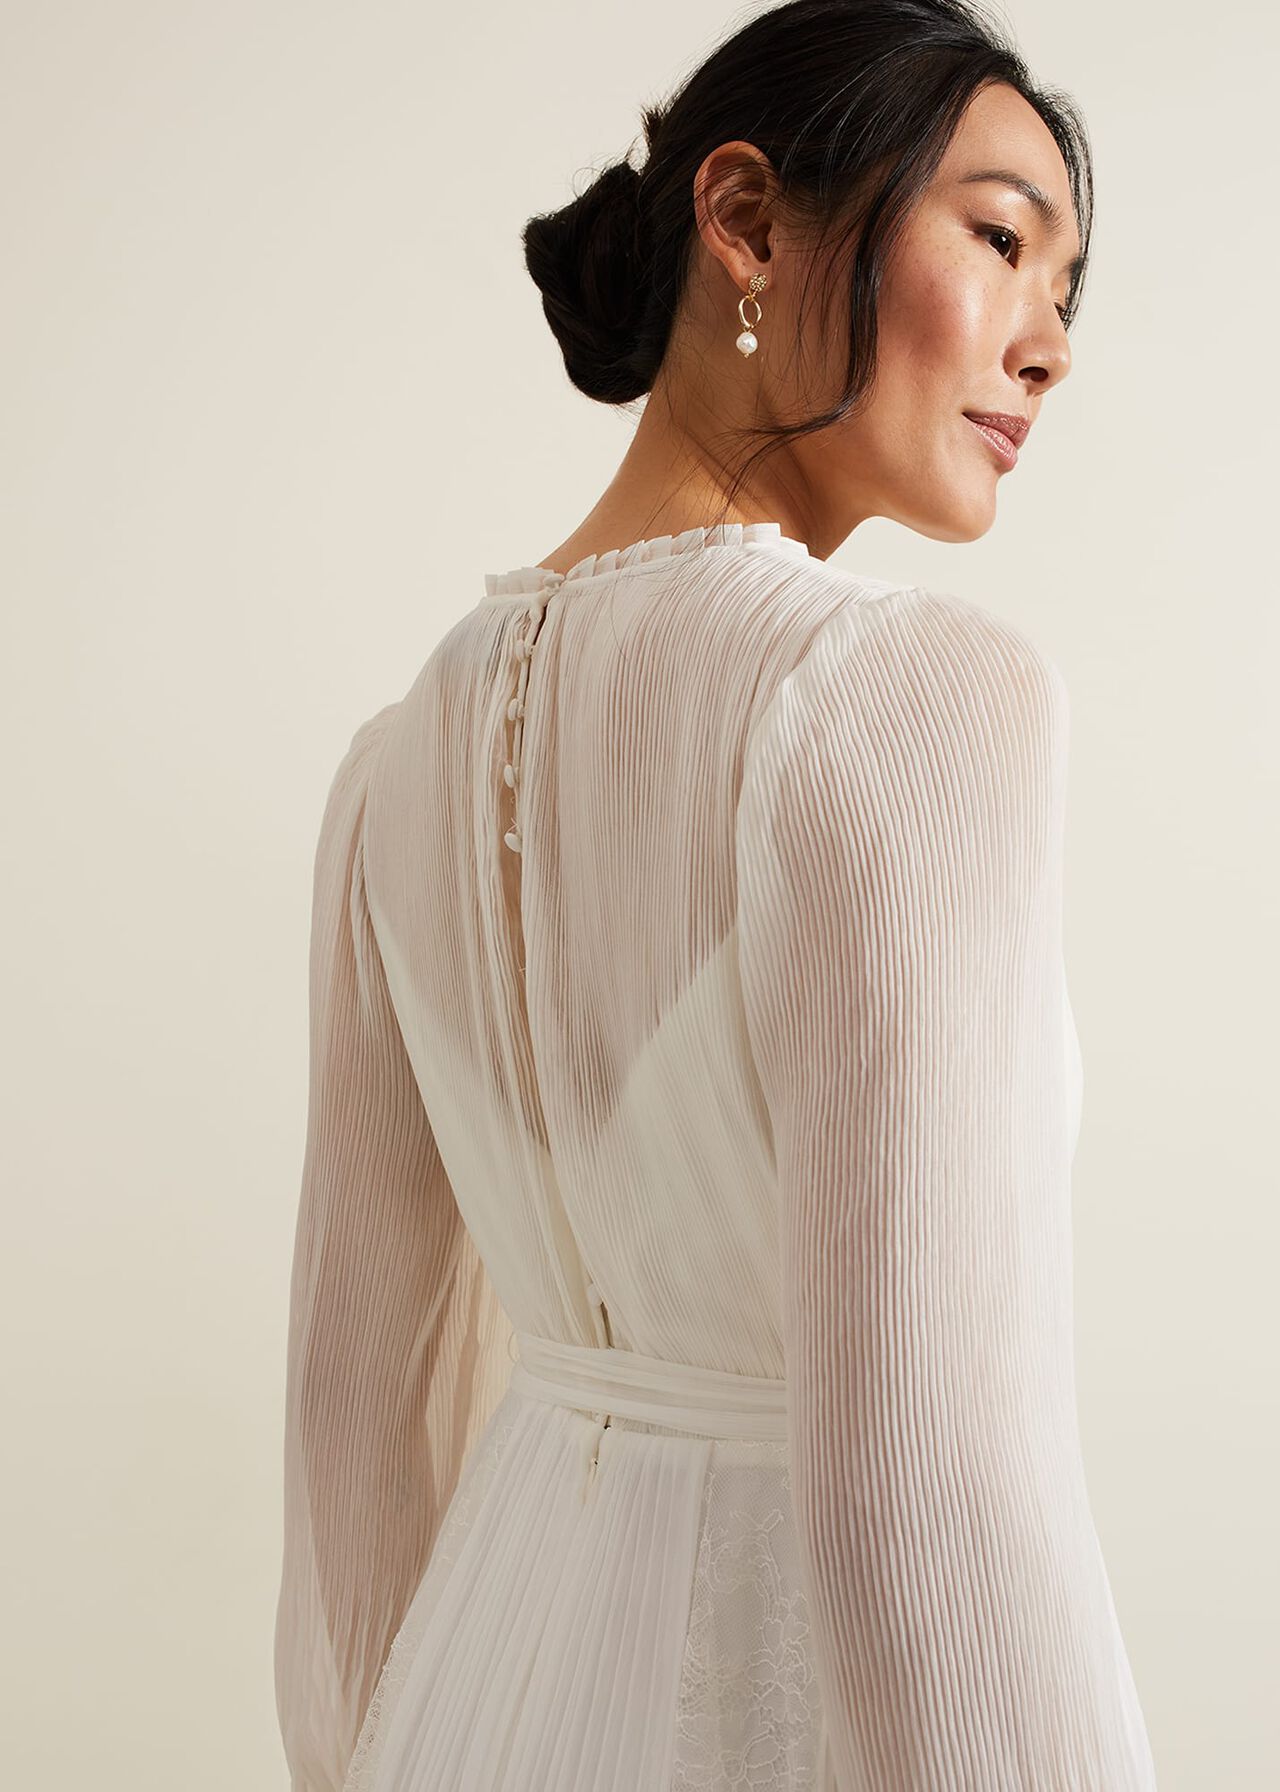 Mariana Pleated Lace Wedding Dress